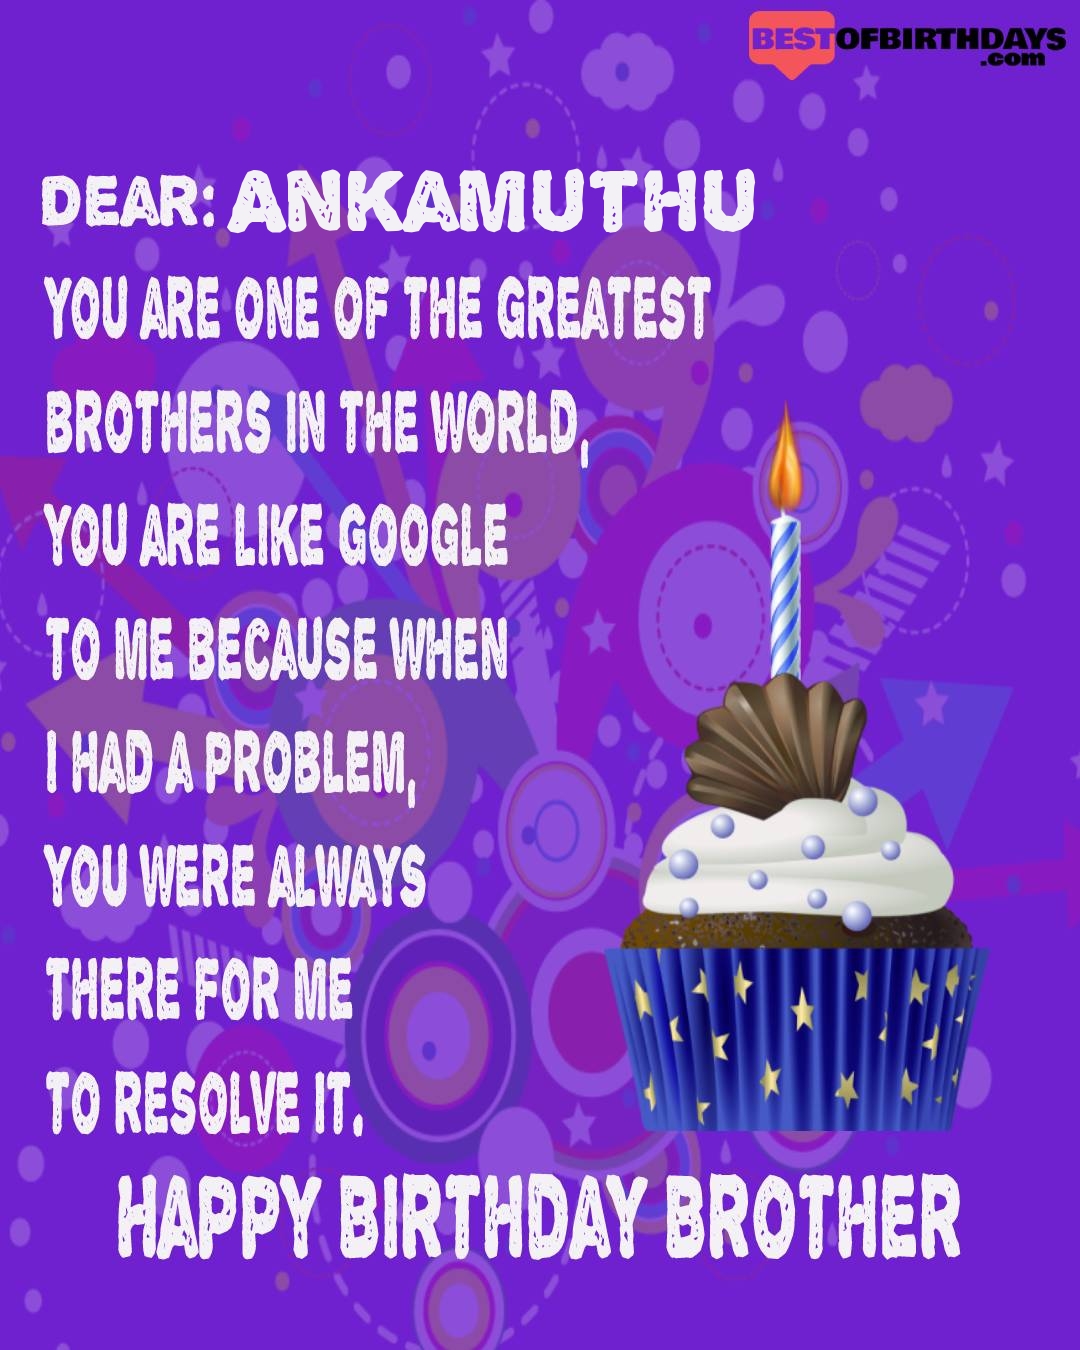 Happy birthday ankamuthu bhai brother bro